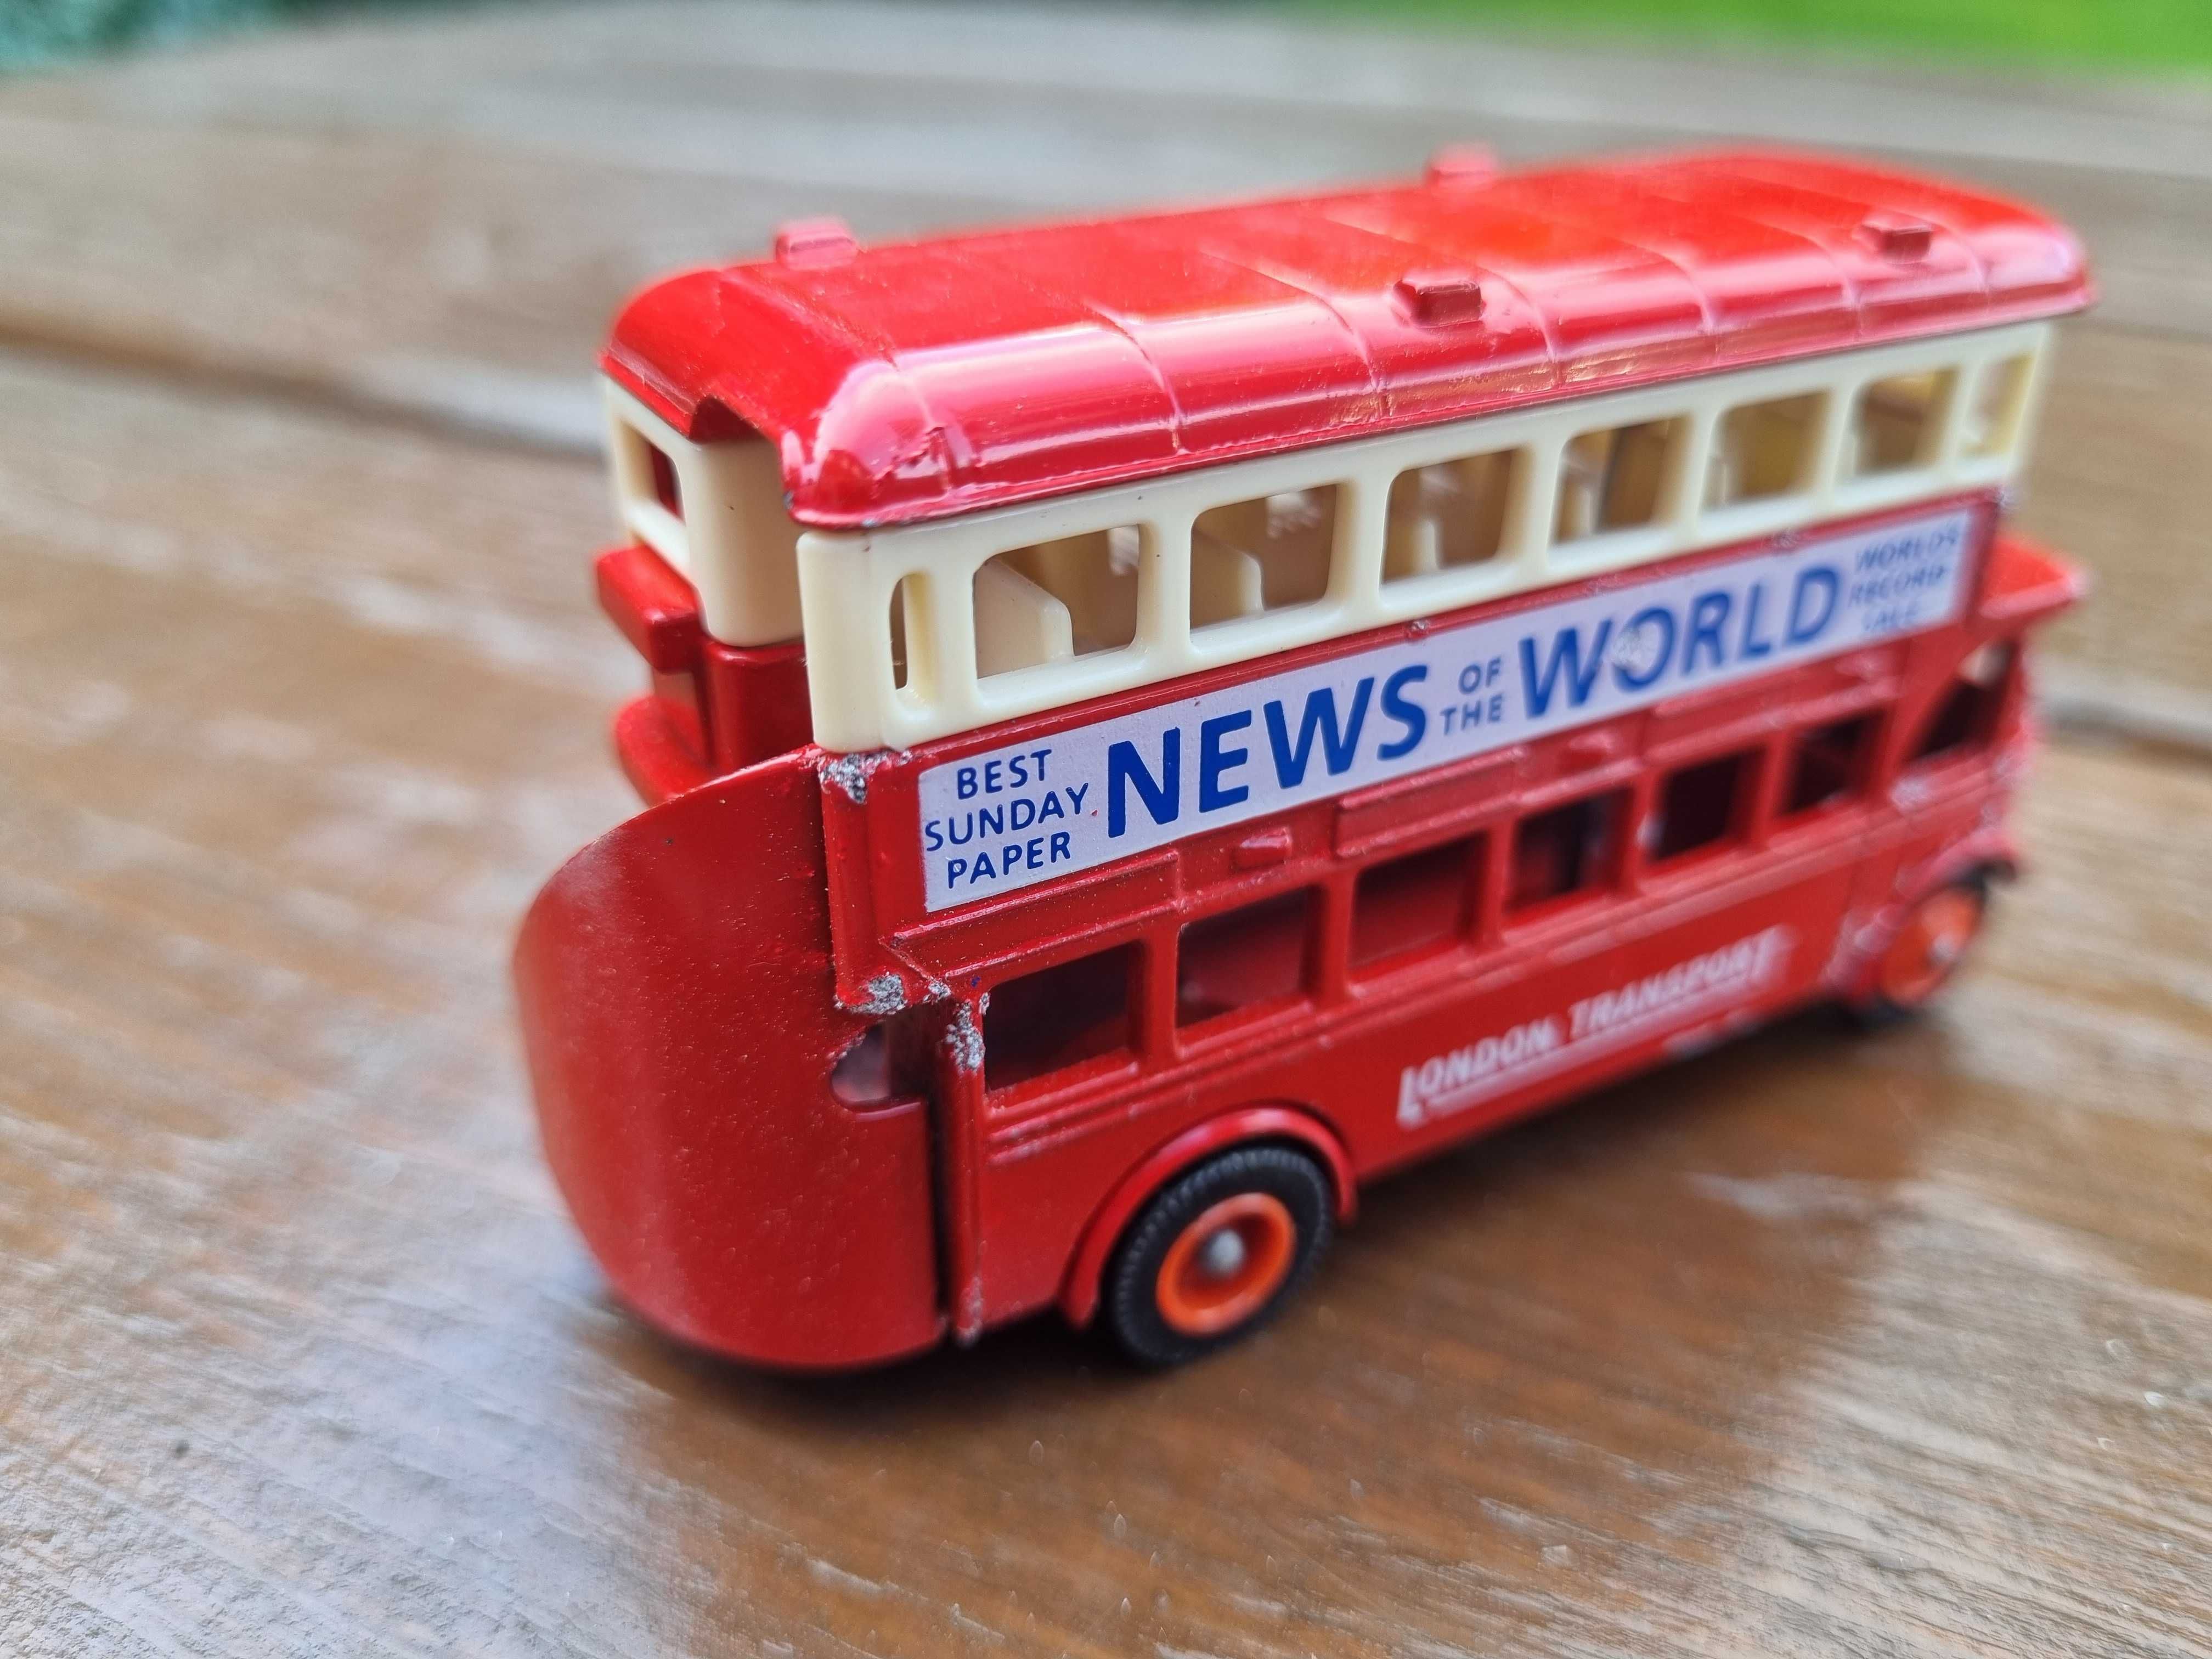 Модель Lledo London Bus - News of the World. Made in Engalnd -див.опис